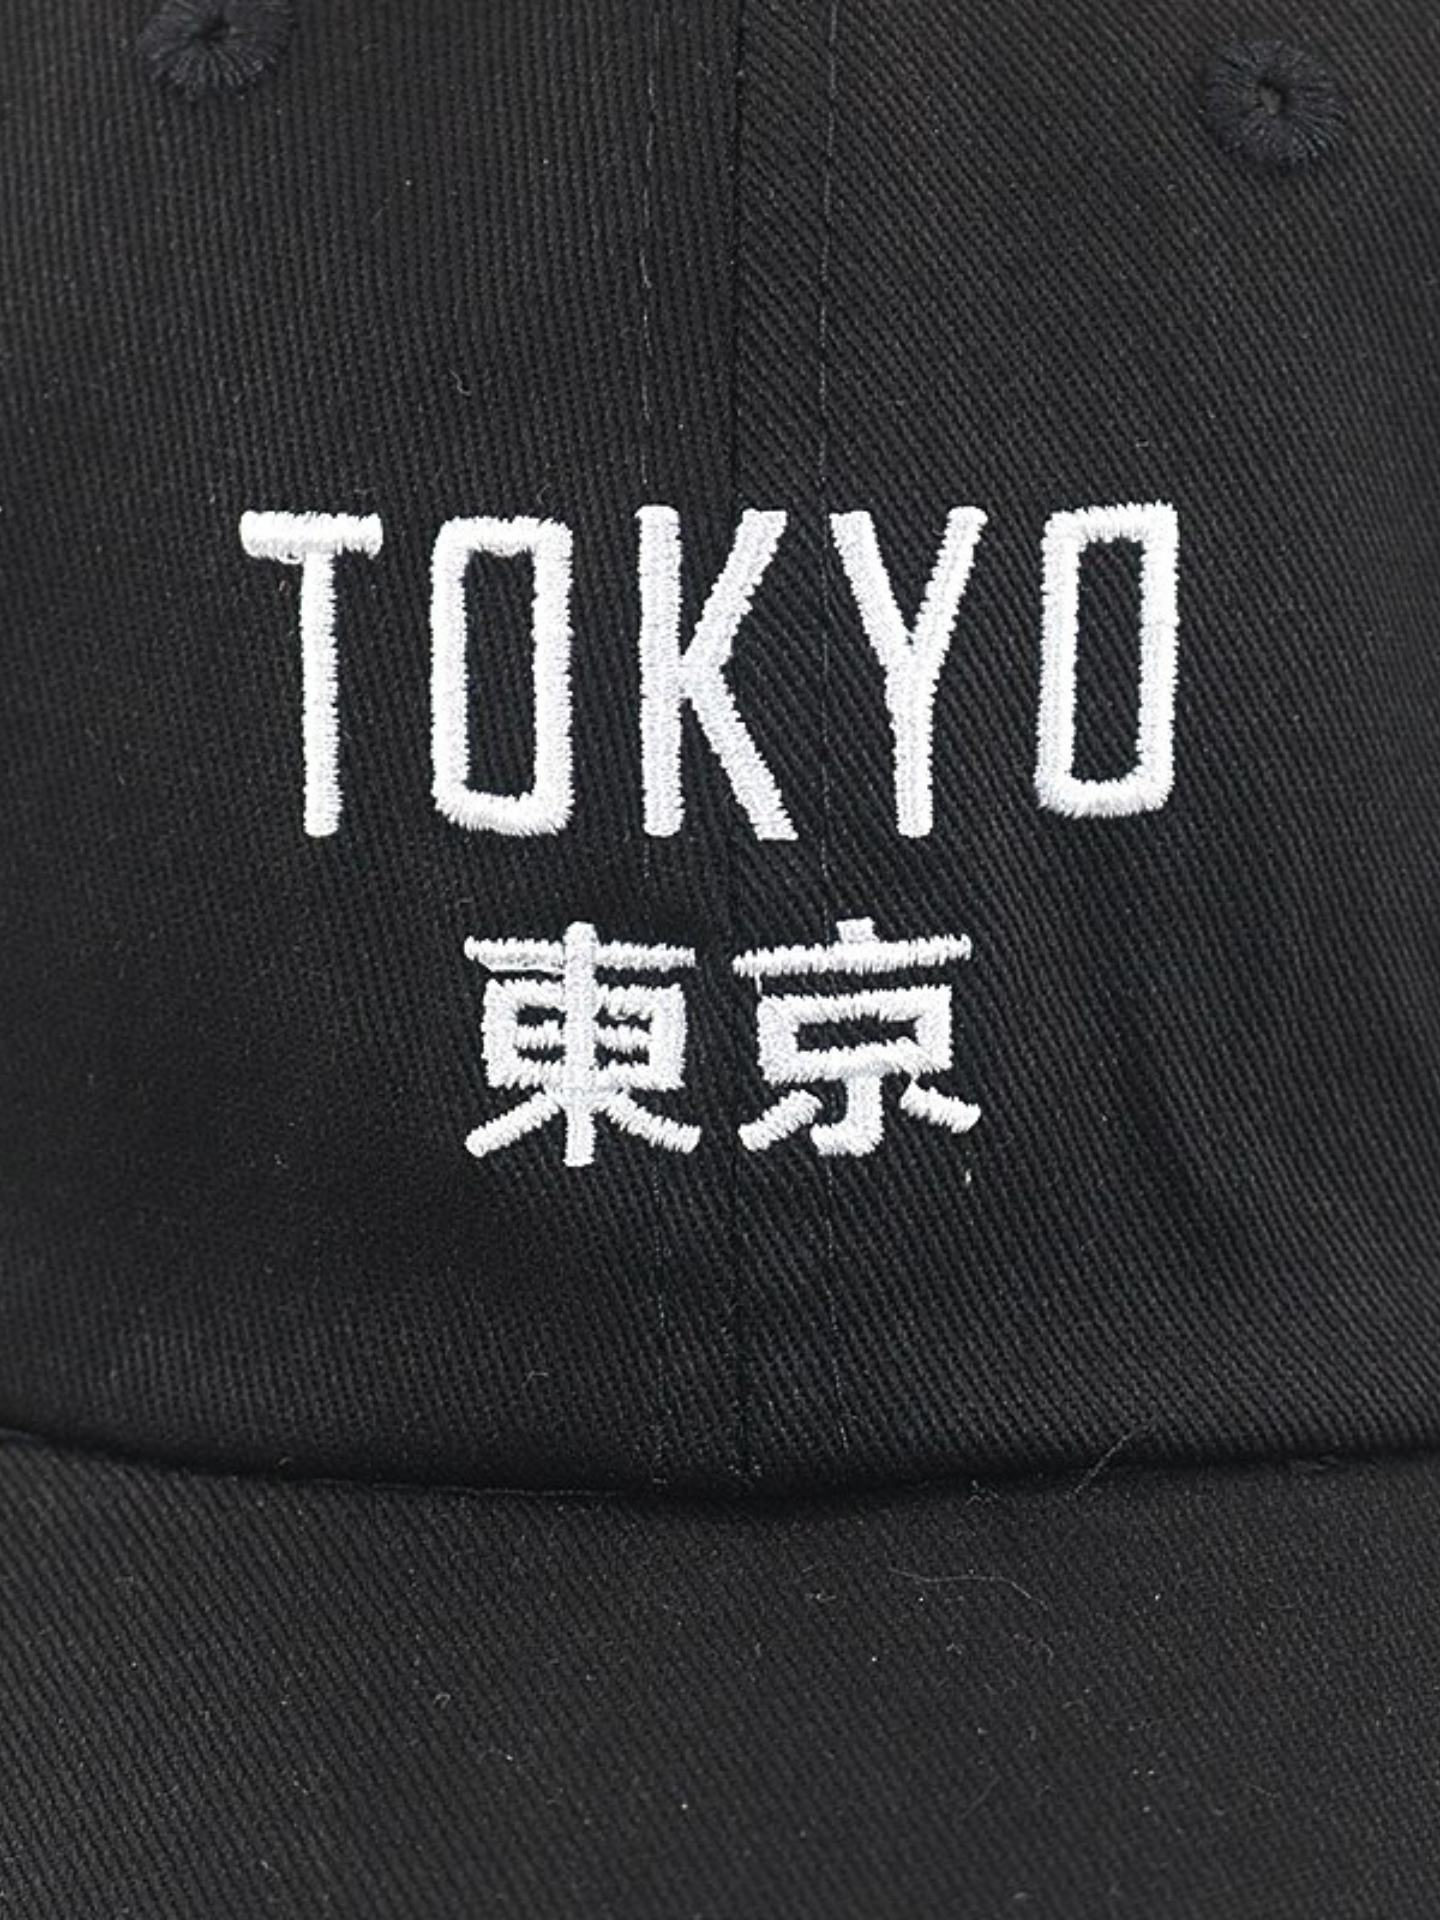 Tokyo Cap